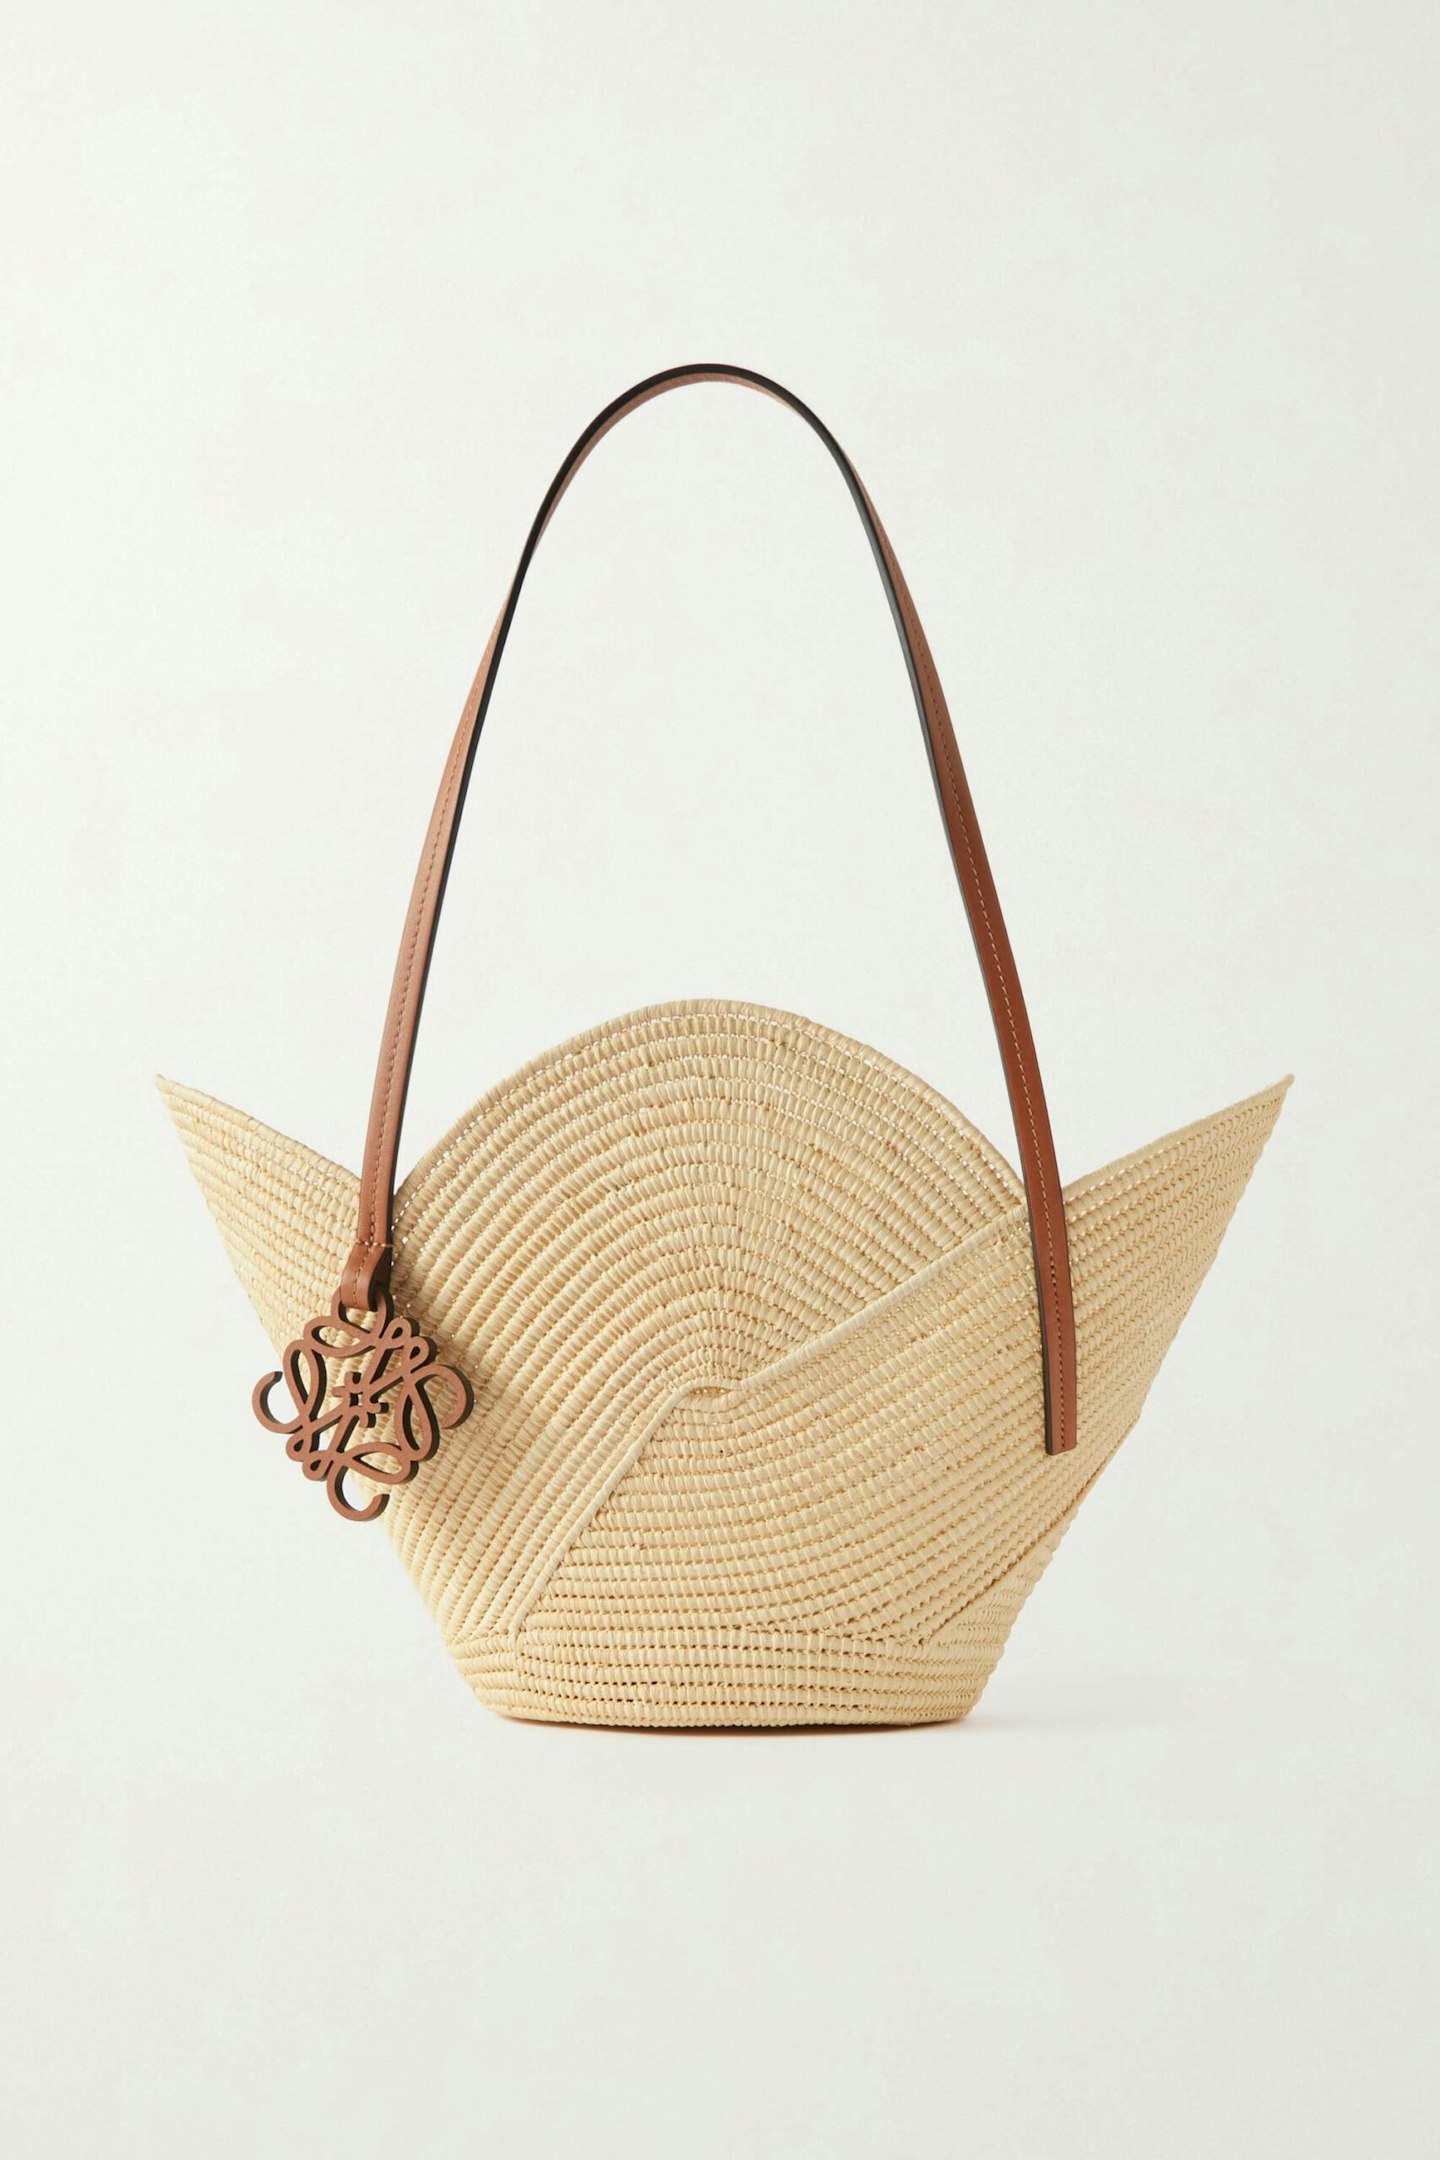 Loewe x Paula's Ibiza, Petal Basket Leather-Trimmed Raffia Tote Bag